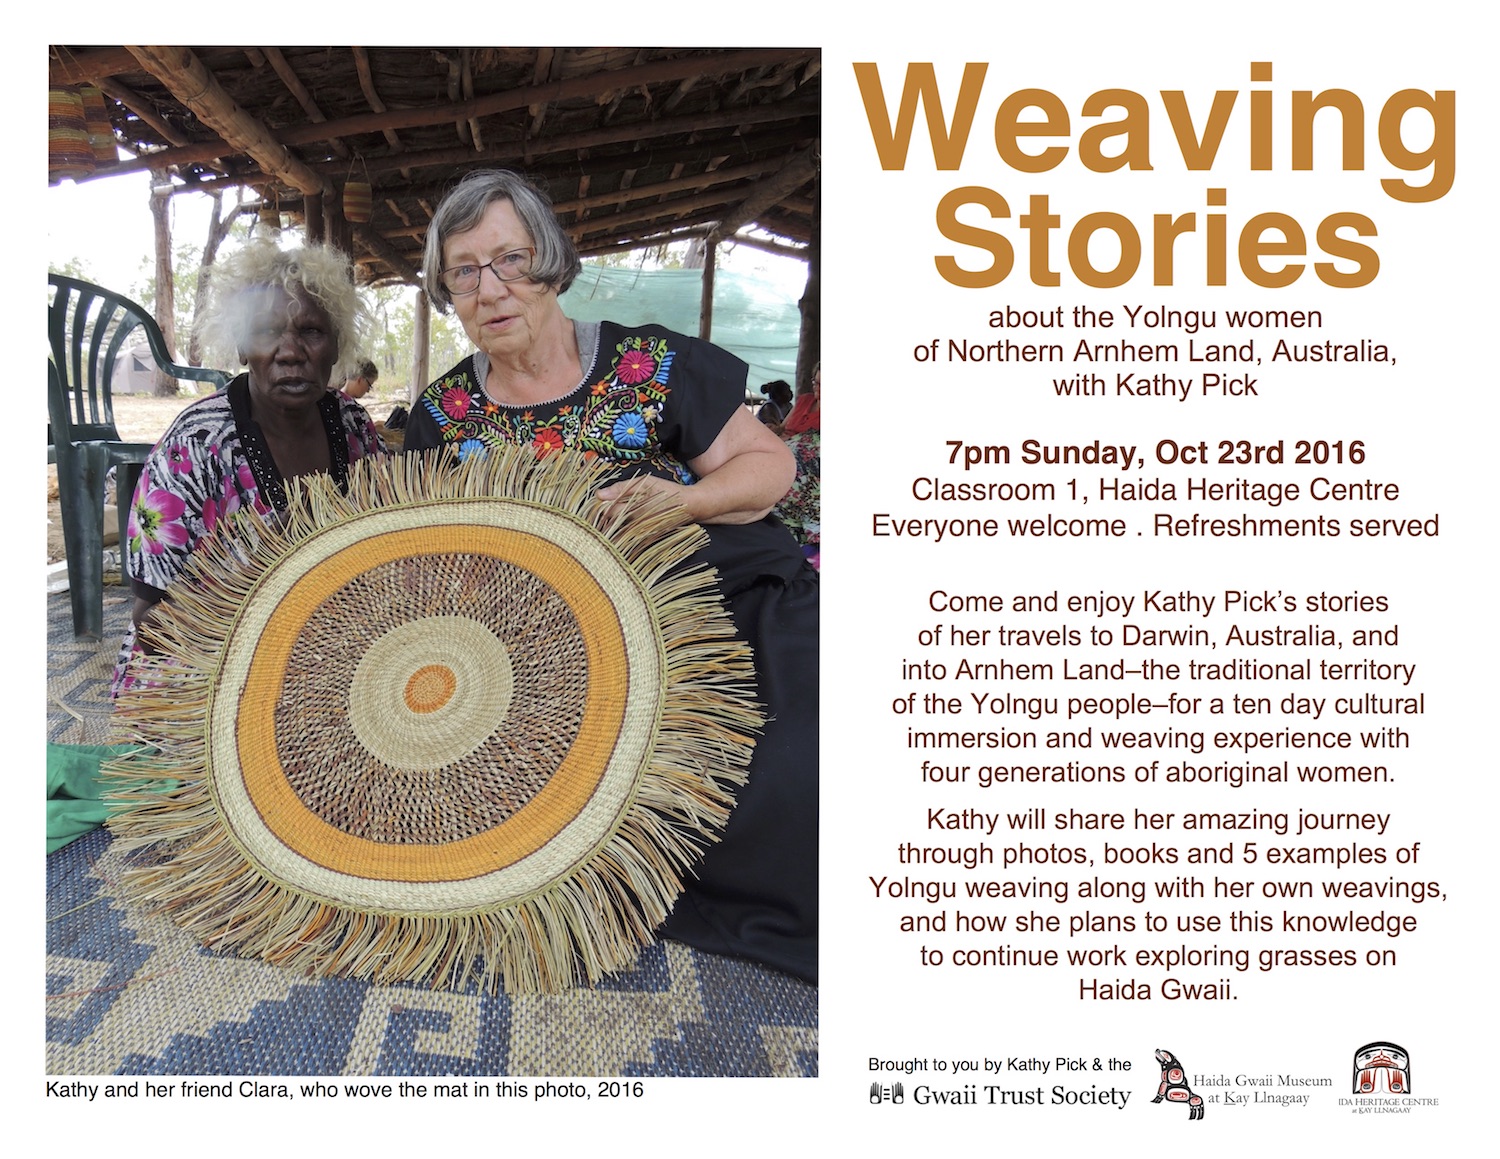 Weaving Stories about the Yolngu women of Northern Arnhem Land, Australia, with Kathy Pick